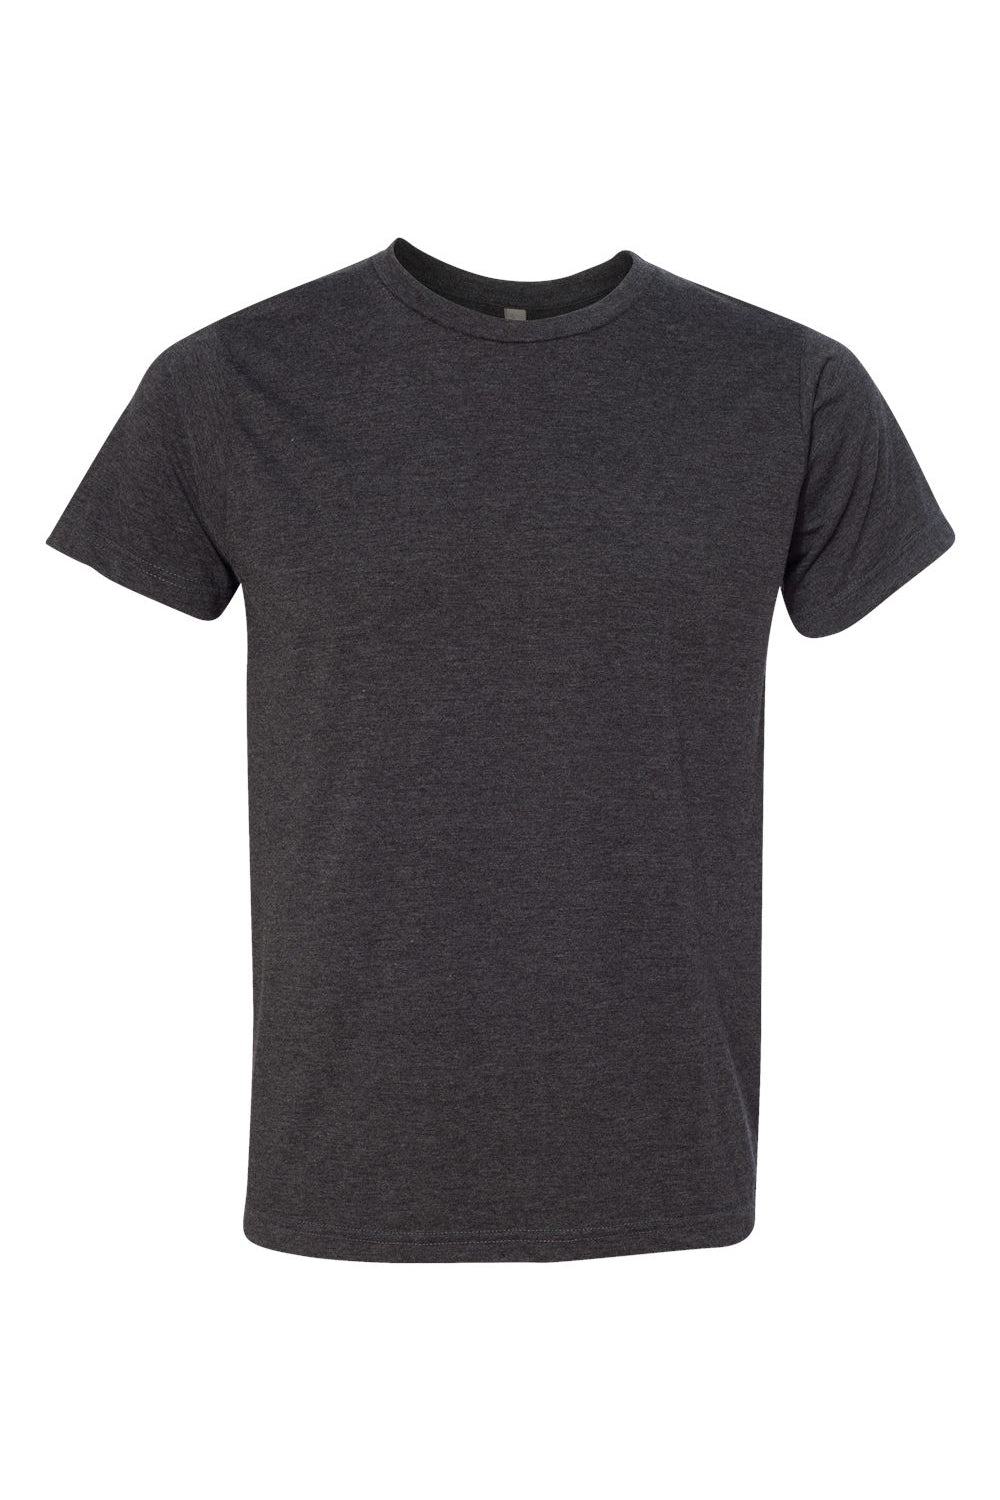 Bayside 5010 Mens USA Made Short Sleeve Crewneck T-Shirt Heather Charcoal Grey Flat Front